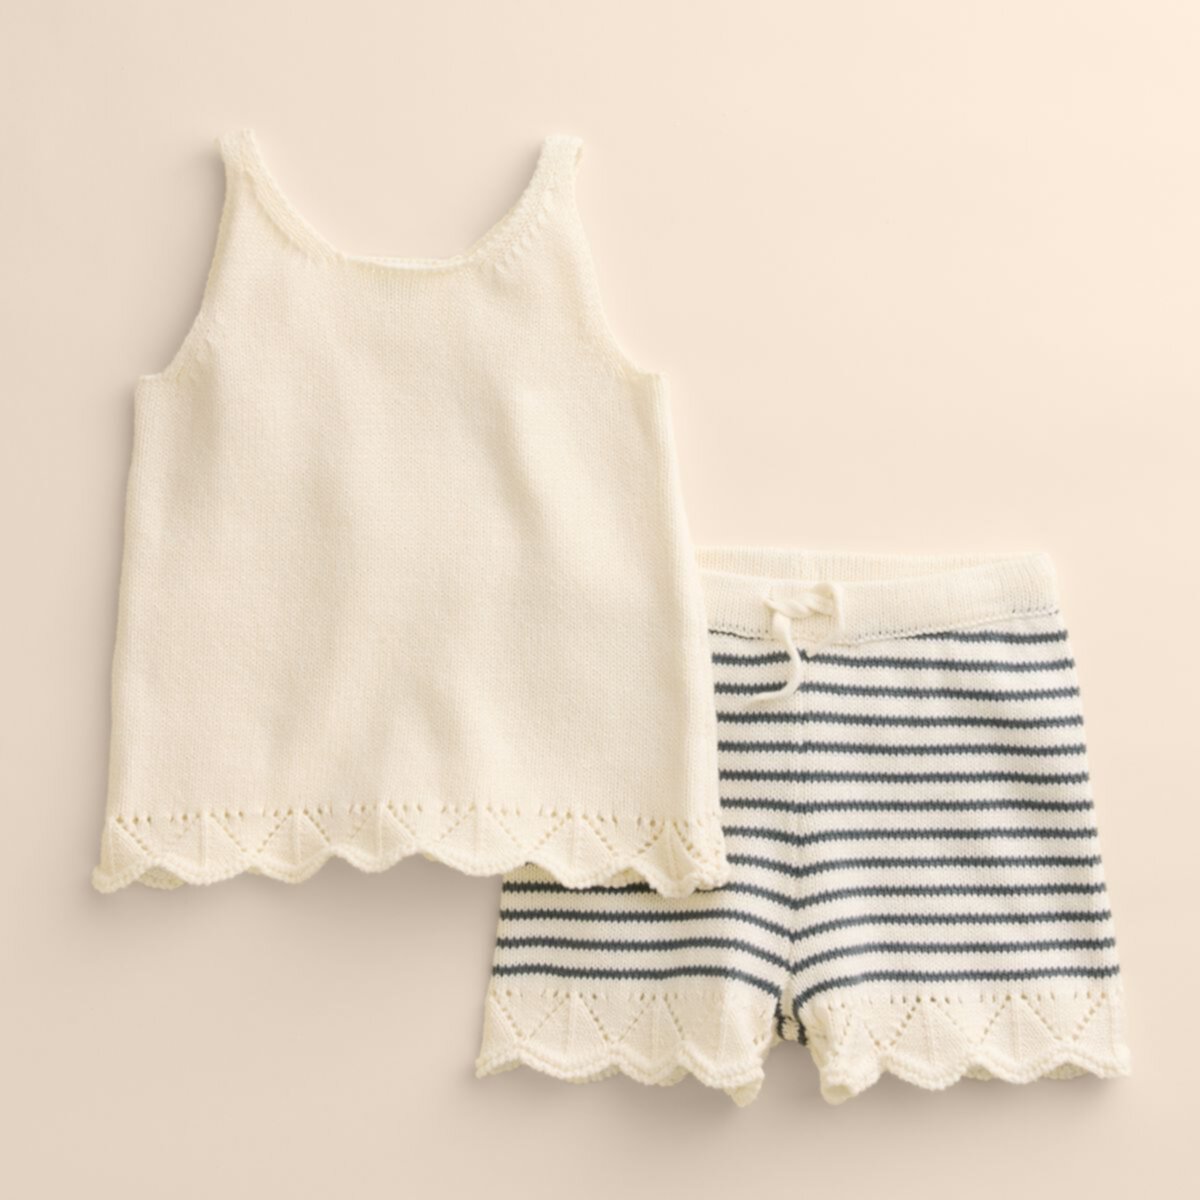 Baby & Toddler Little Co. by Lauren Conrad Sweater Knit Tank Top & Shorts Set Little Co. by Lauren Conrad